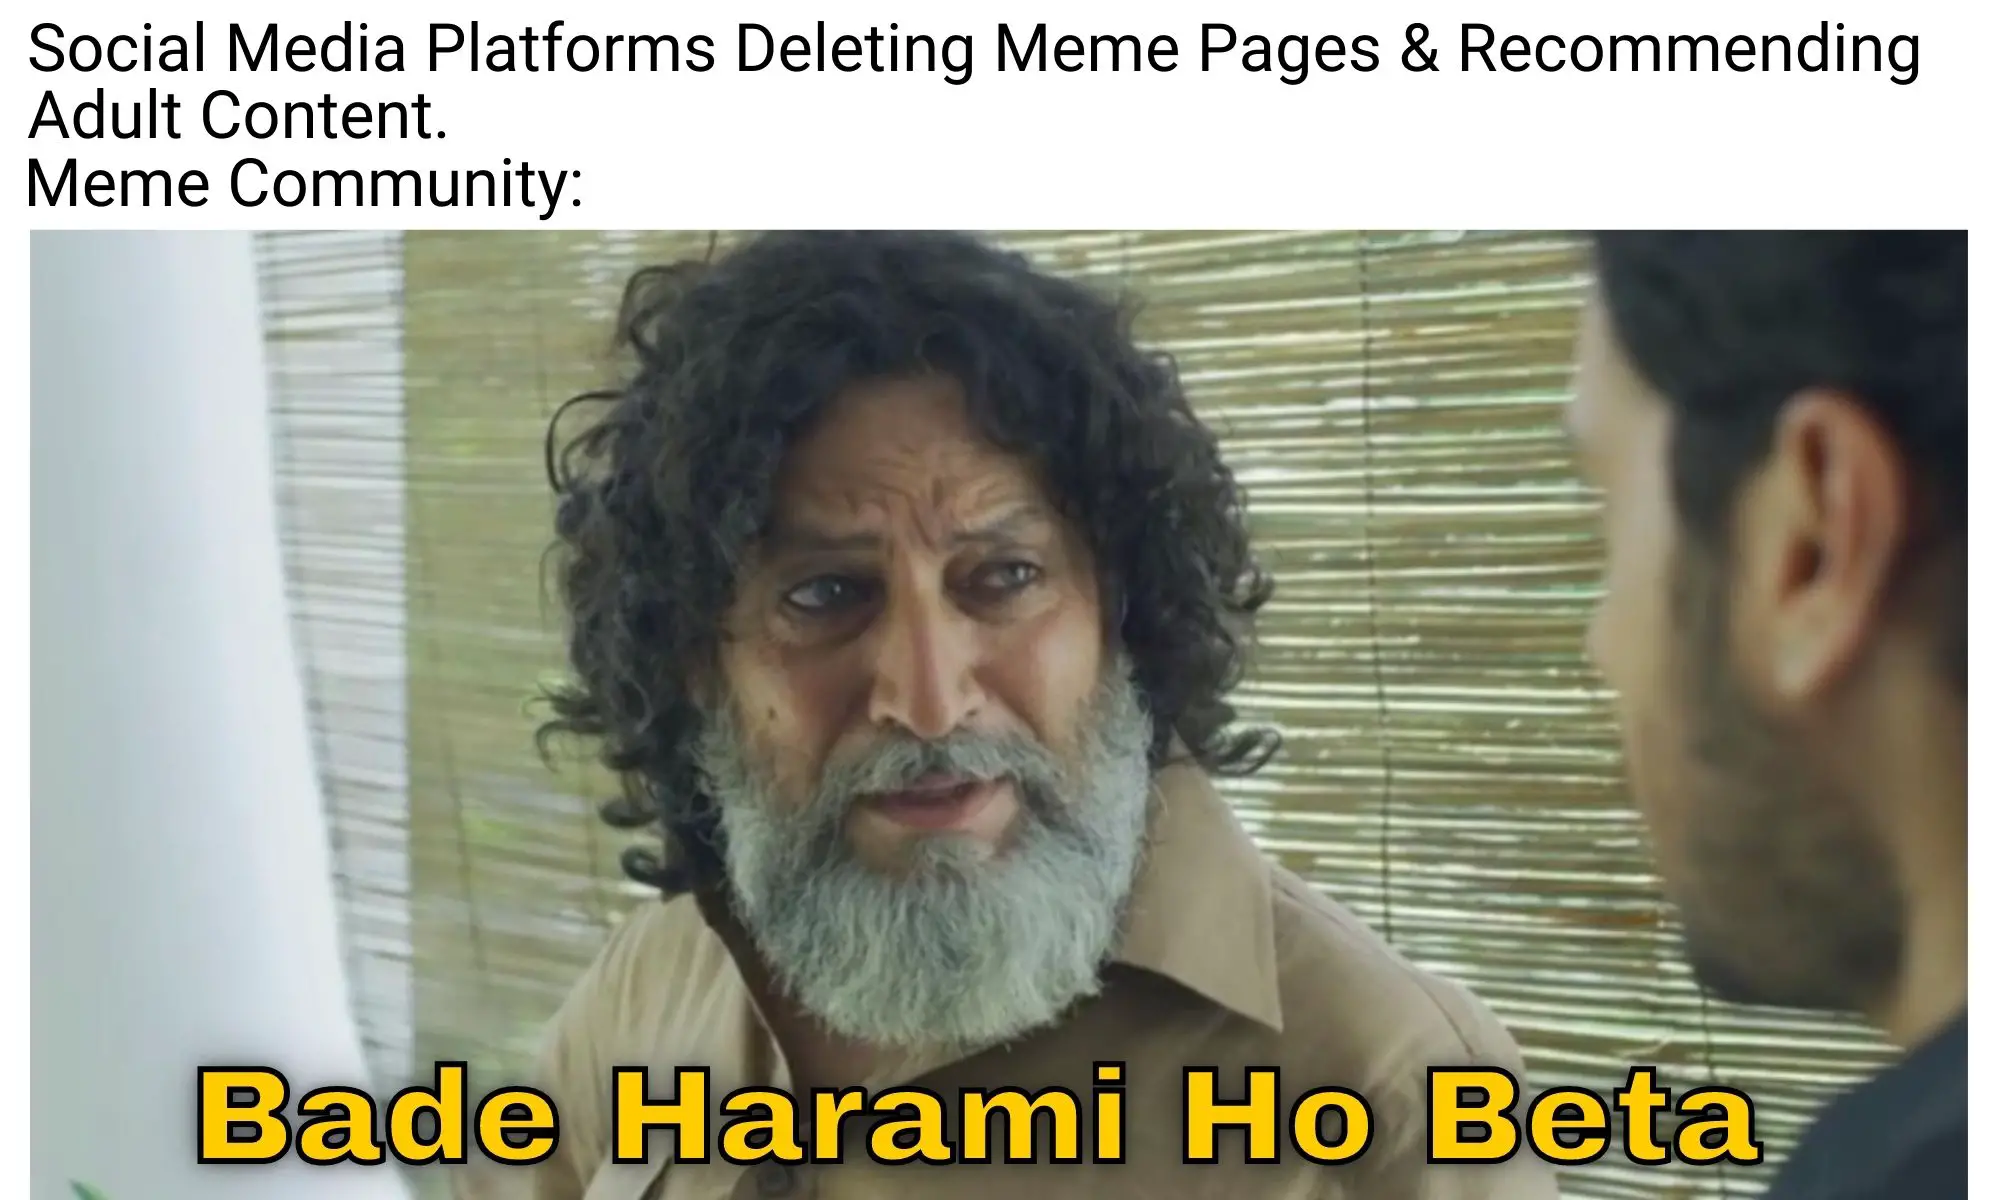 Bade Harami Ho Beta meme on Mirzapur season 1